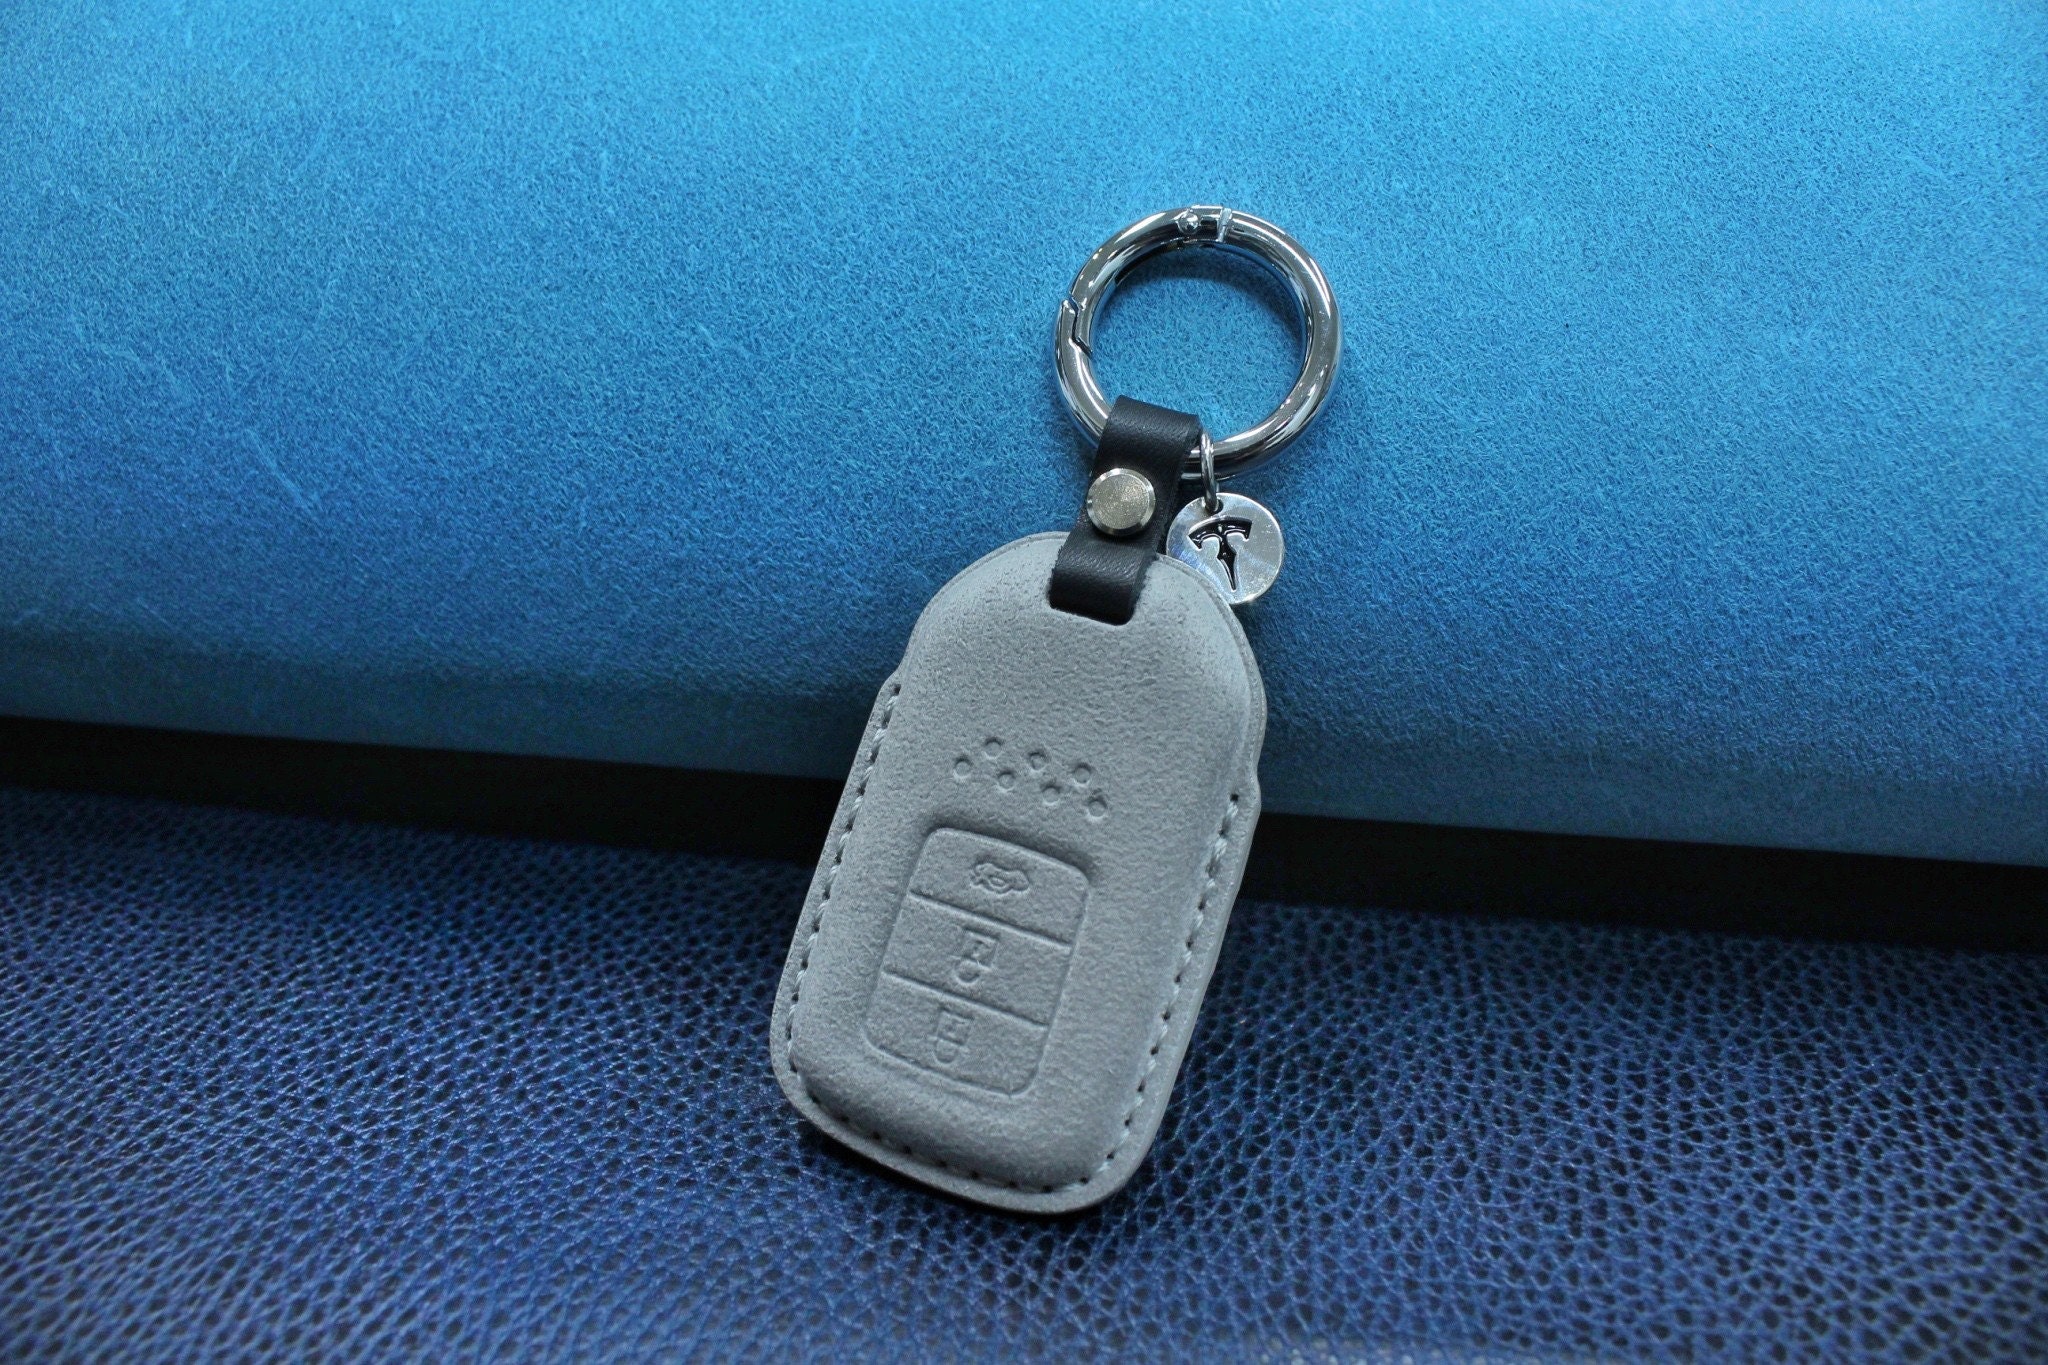 Alcantara key cover for BMW keys Incl. hook + key ring (LEK69-B8), 22,90 €